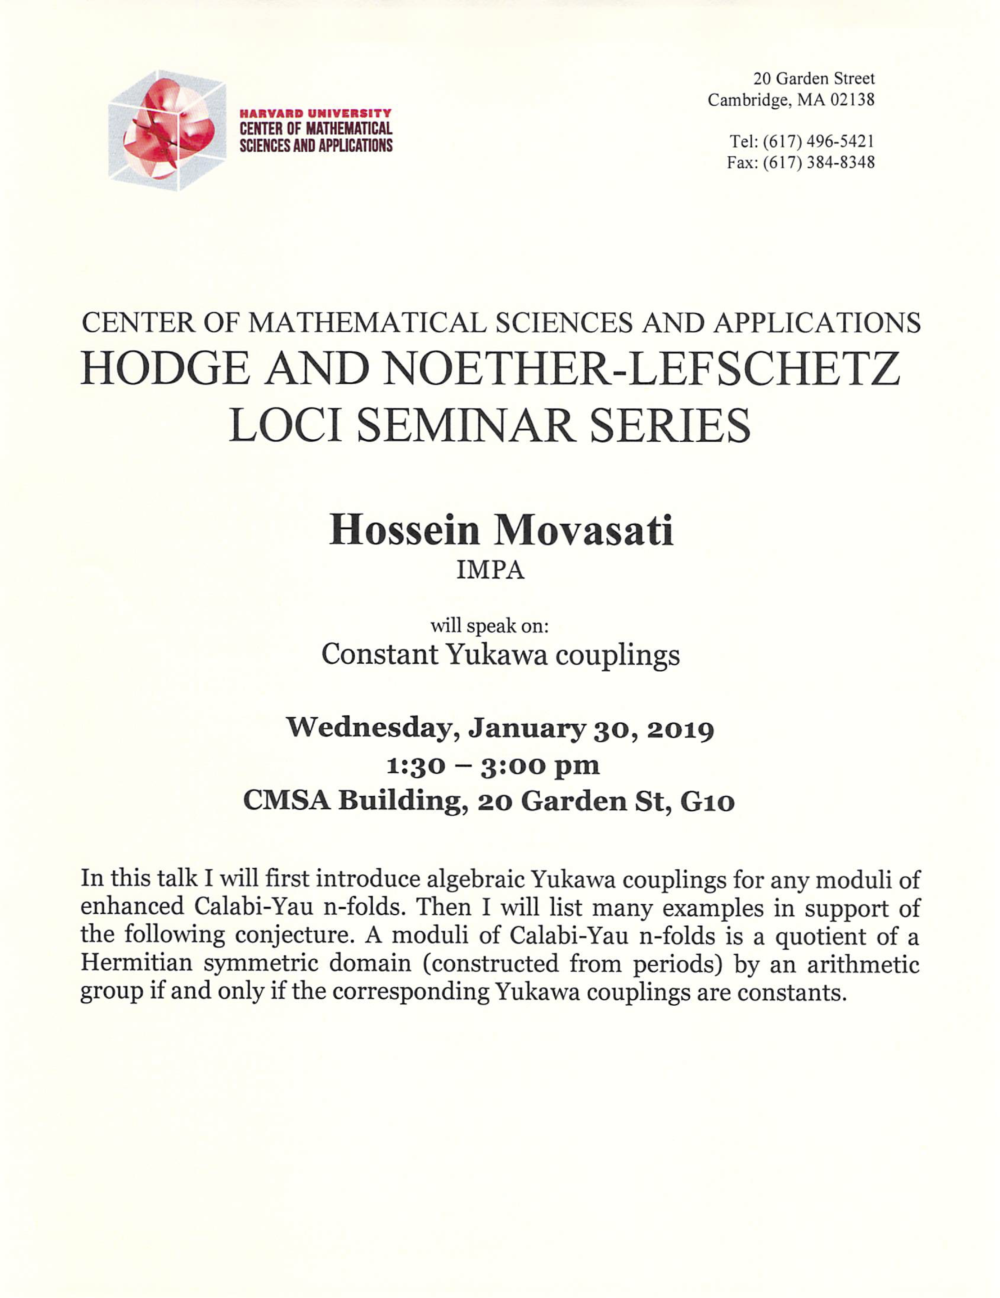 1/30/2019 Hodge and Noether-Lefschetz Loci Seminar